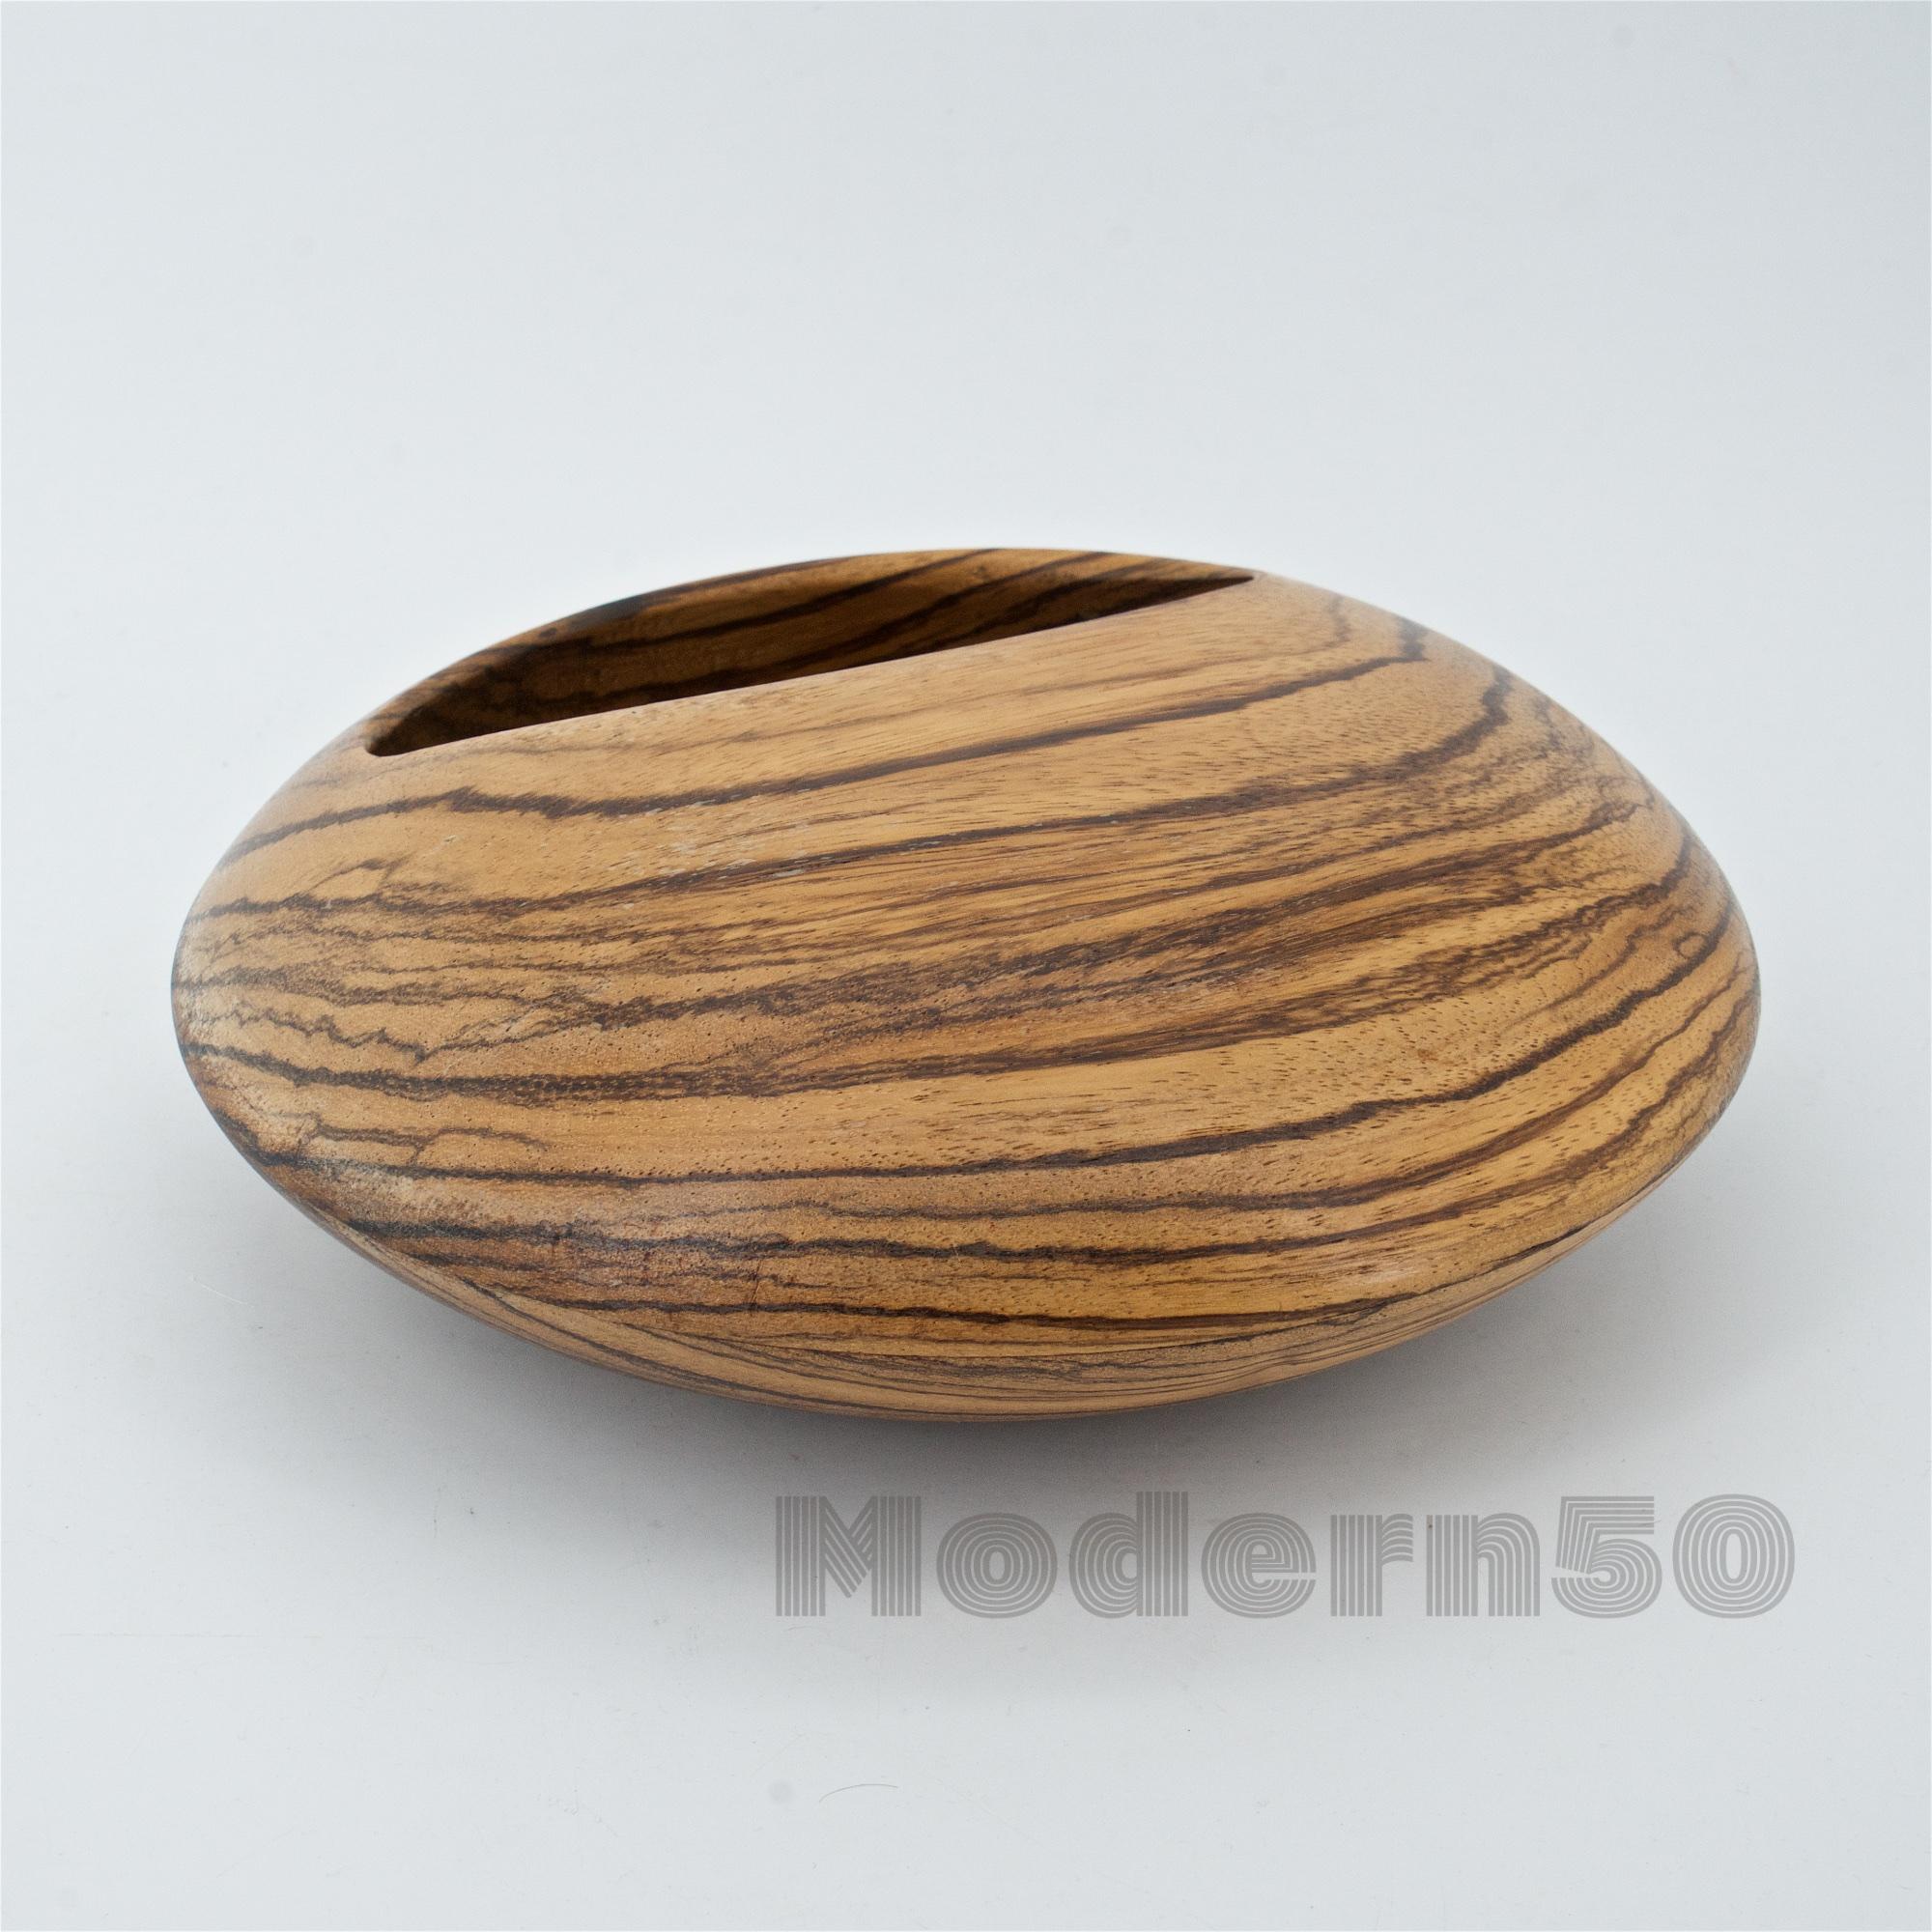 Swedish Scandinavian Zebra Wood Sculpture Centerpiece Orb Dish Bowl Space Age Mattsson For Sale